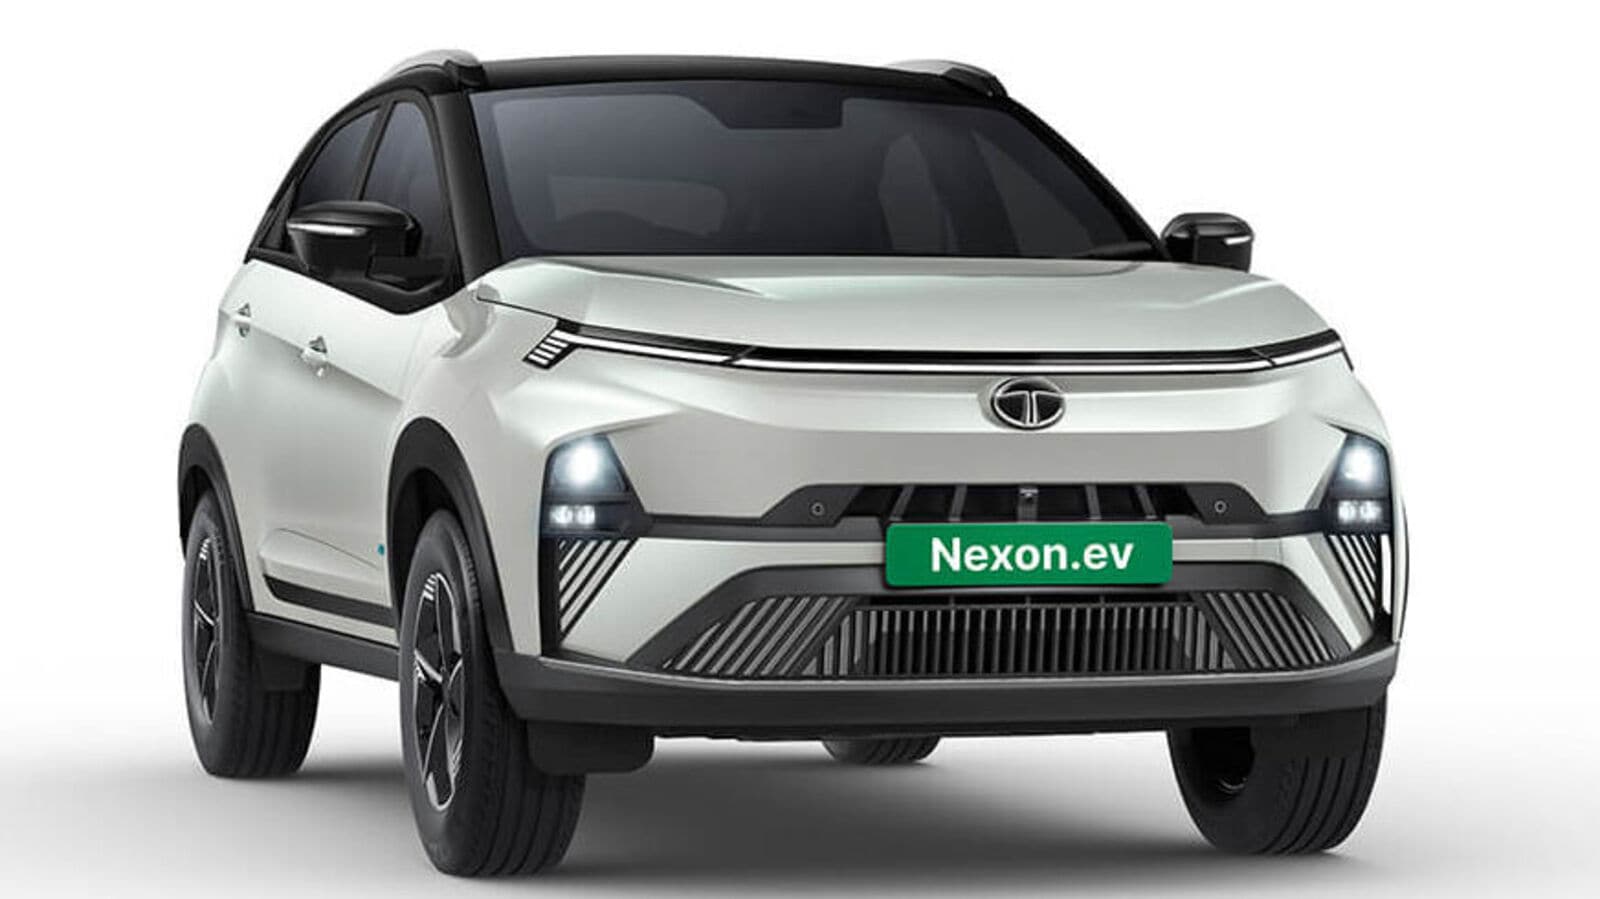 Tata Nexon EV facelift breaks cover: Key highlights